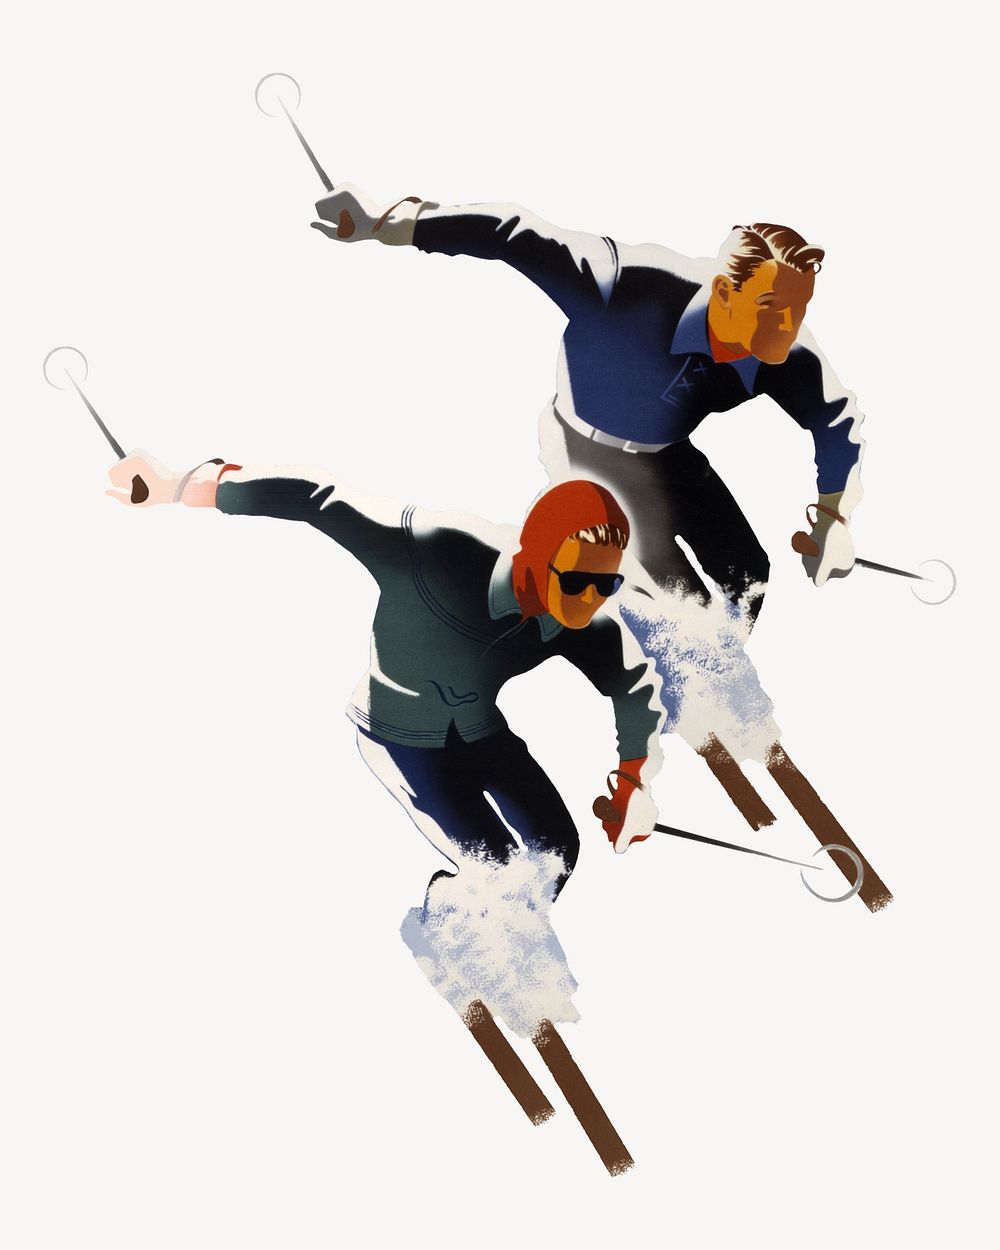 Vintage ski, sport illustration by Joseph Binder. Remixed by rawpixel.